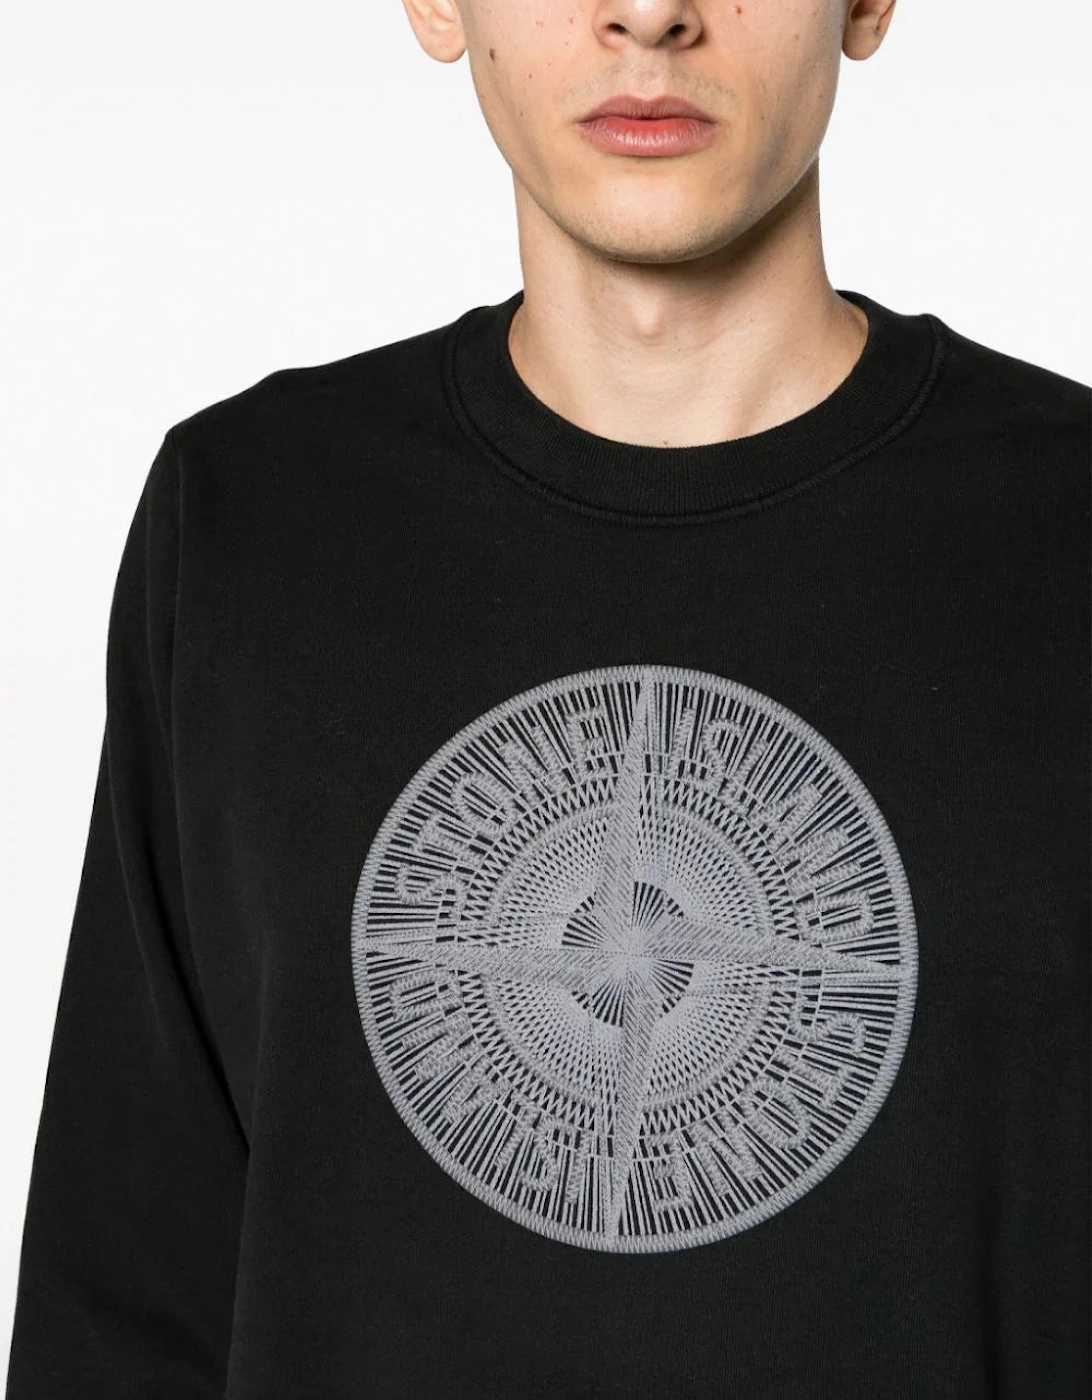 Industrial One Compass Circle logo Sweatshirt in Black